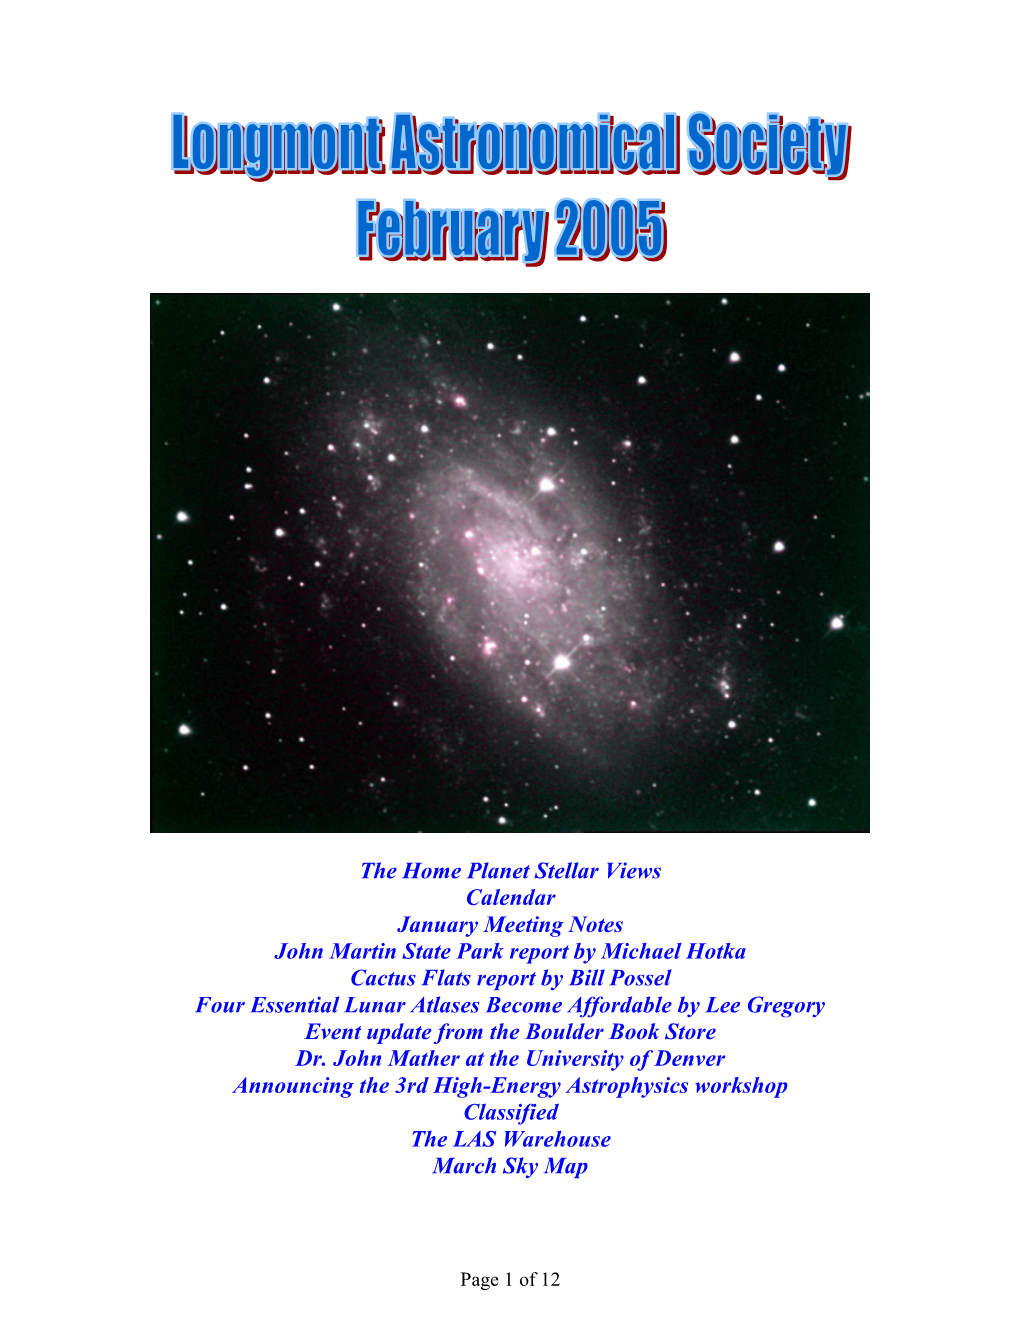 The Home Planet Stellar Views Calendar January Meeting Notes